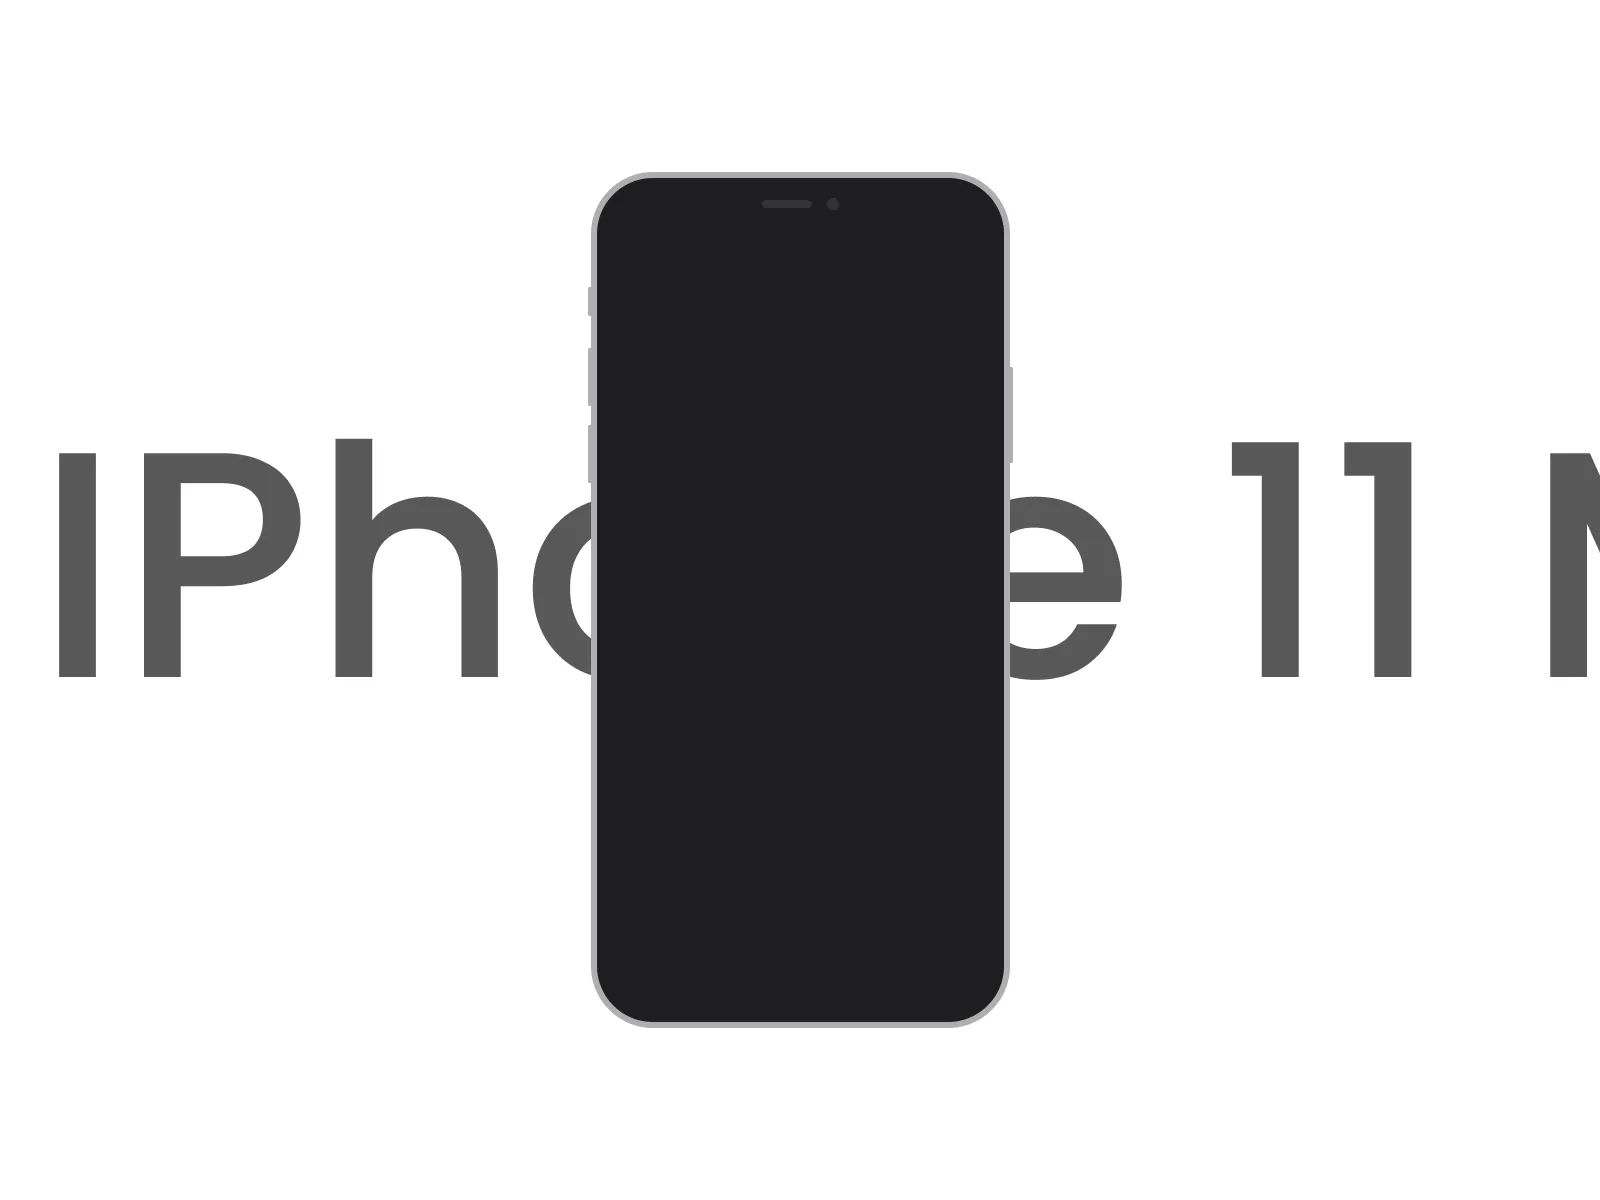 iPhone 11 Pro Flat Mockup  - Free template